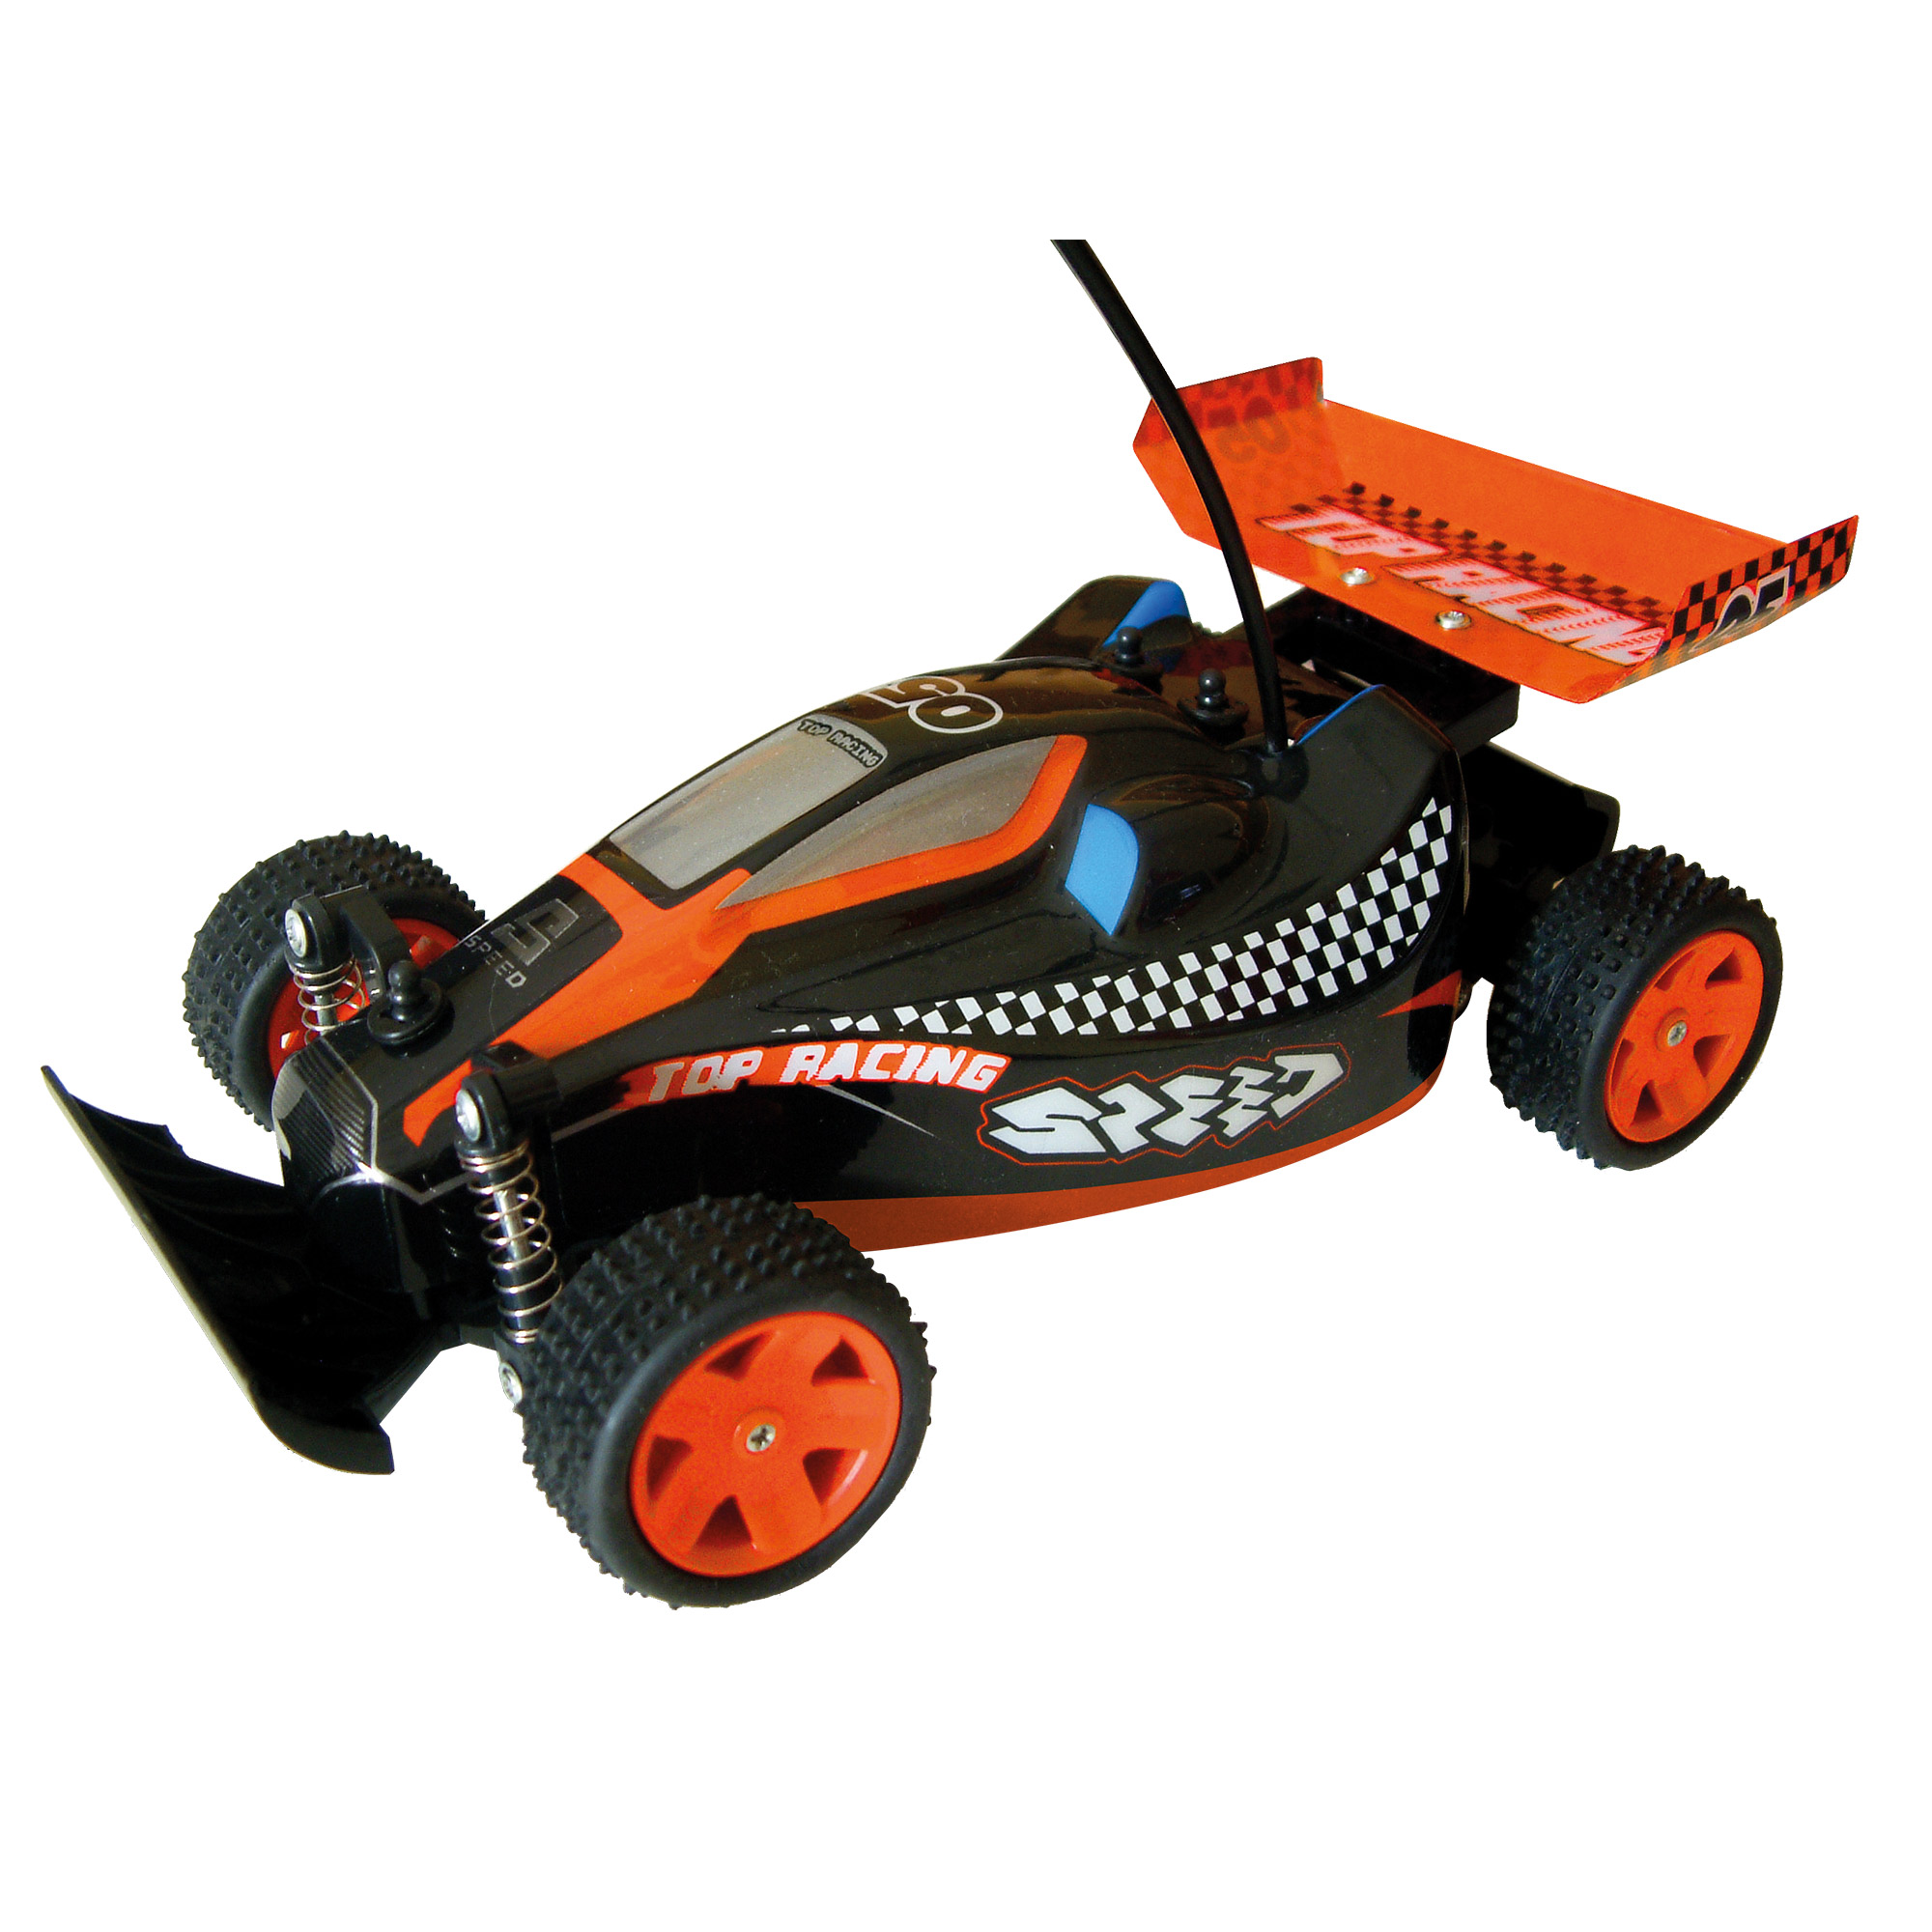 Auto r/c dune buggy - MOTOR & CO.